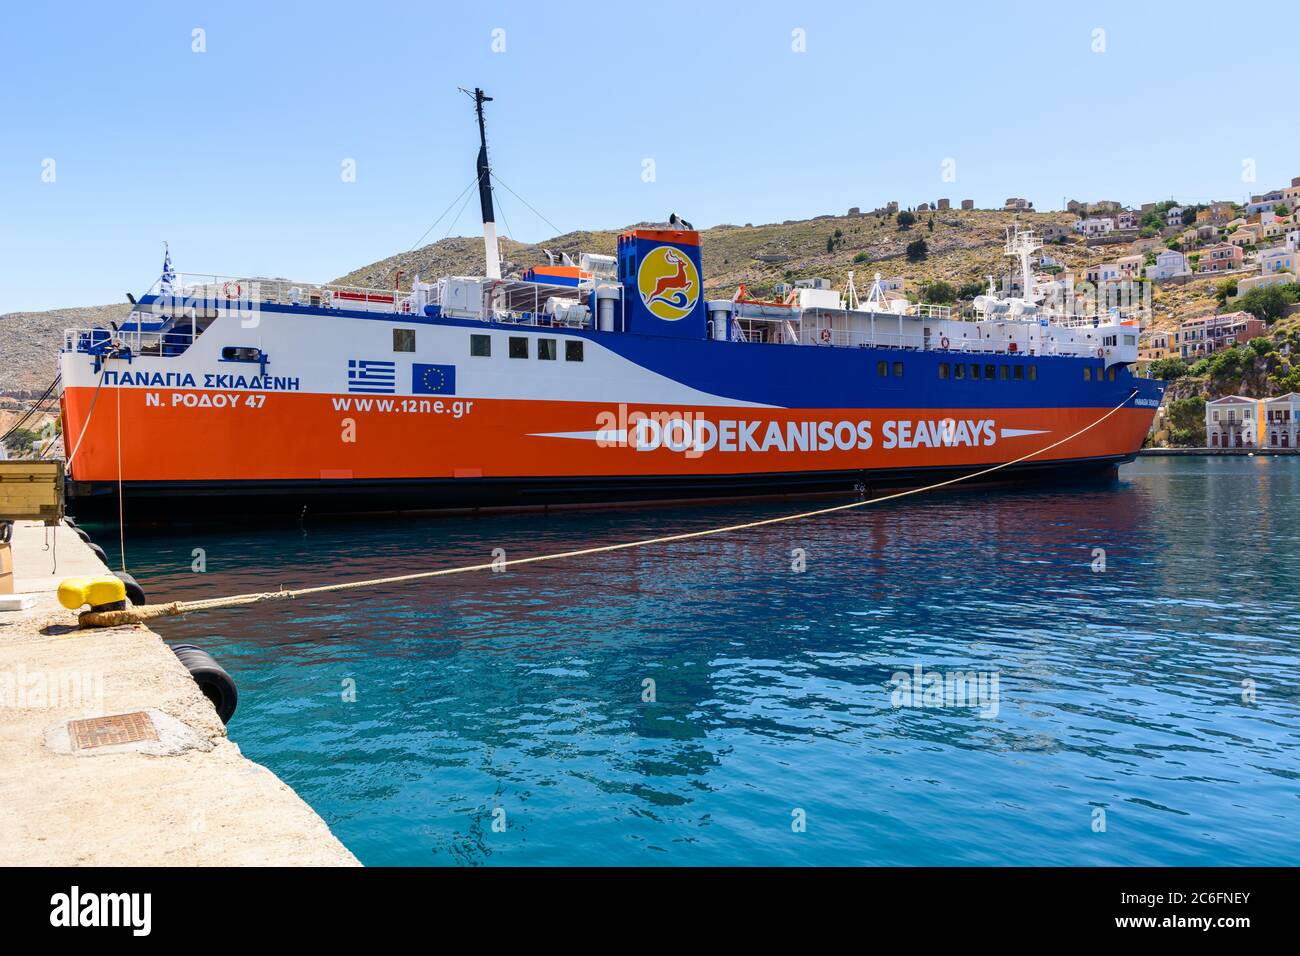 SYMI, GREECE - May 15, 2018: Panagia Skiadeni ferry at the port of Gialos during the summer season. Symi island, Greece Stock Photo